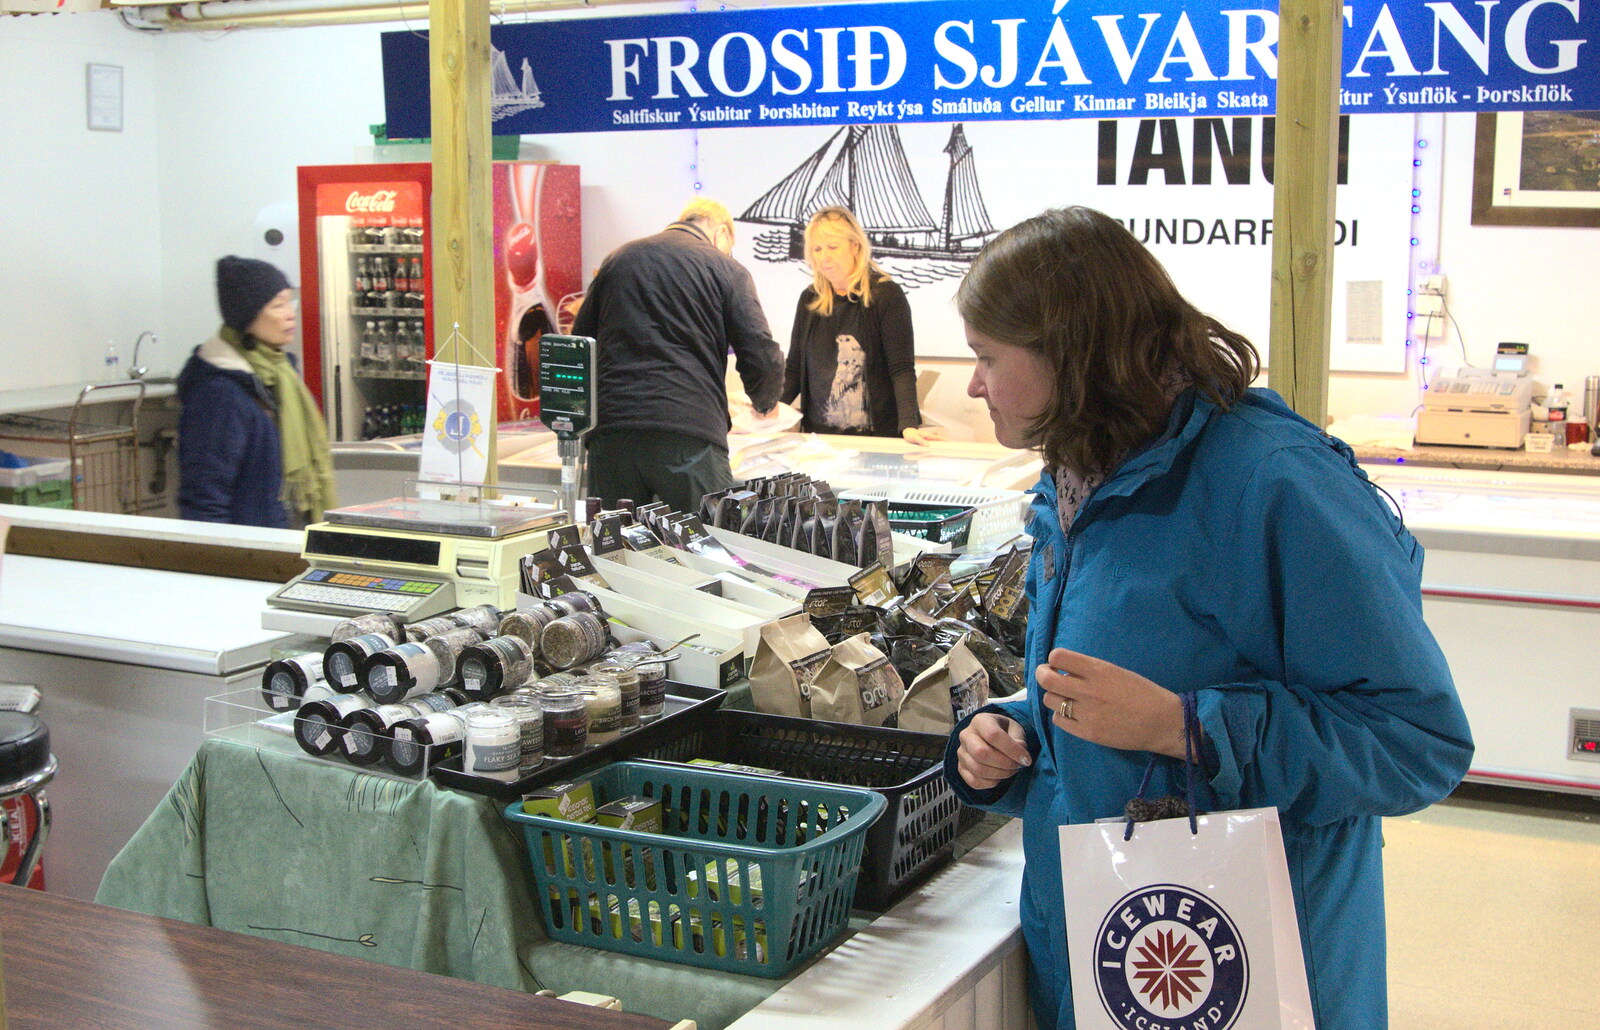 Isobel inspects some food at Kolaportið from Stríðsminjar War Relics, Perlan and Street Art, Reykjavik, Iceland - 23rd April 2017